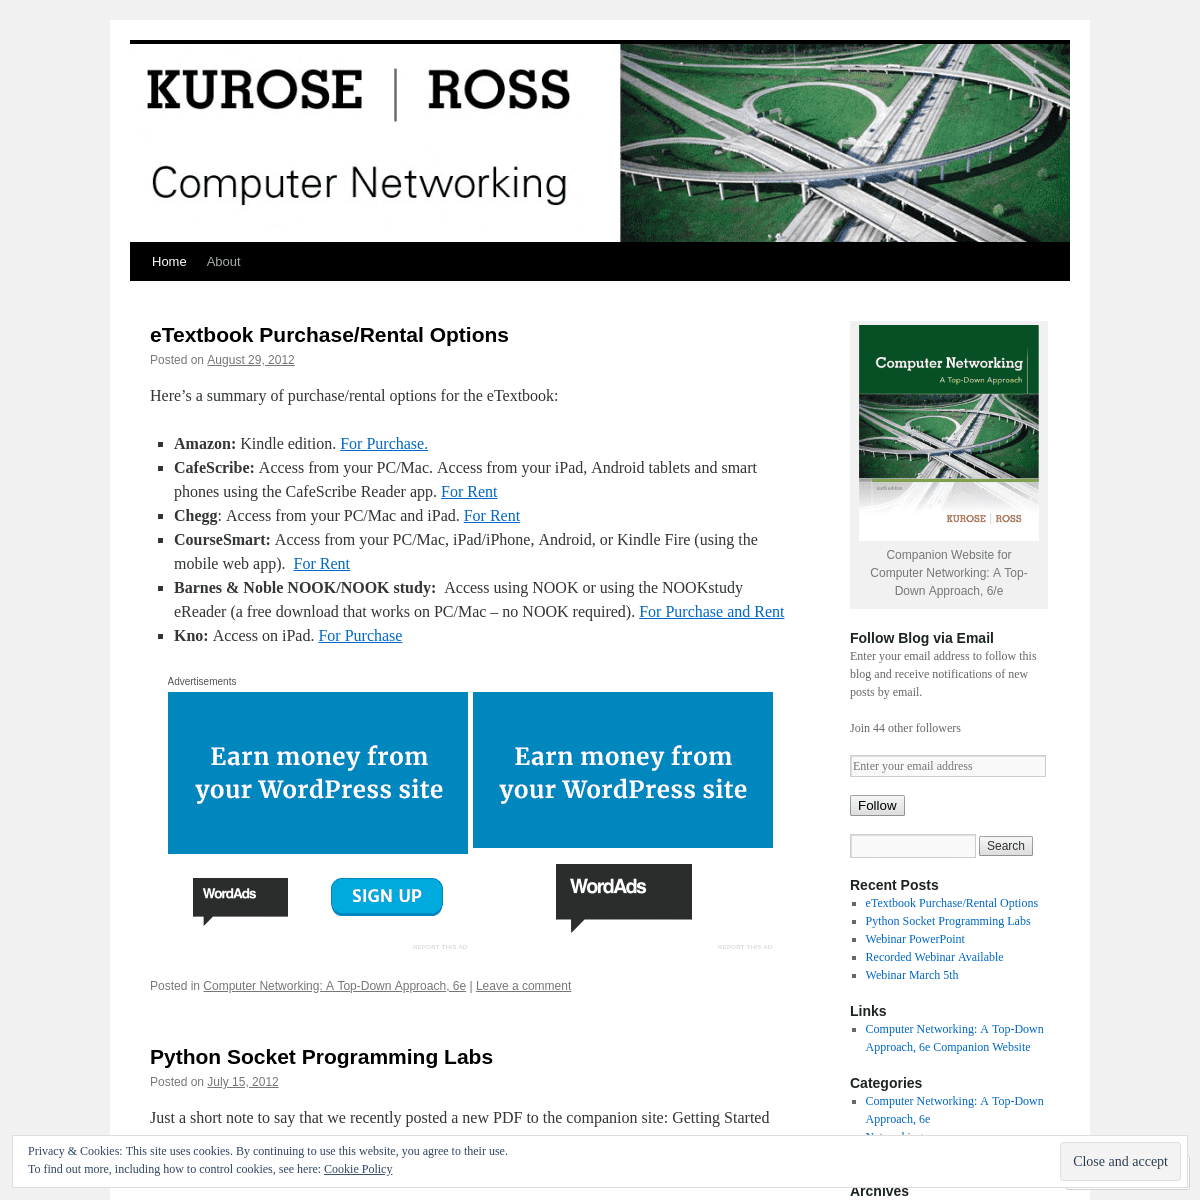 A complete backup of kuroseross.wordpress.com